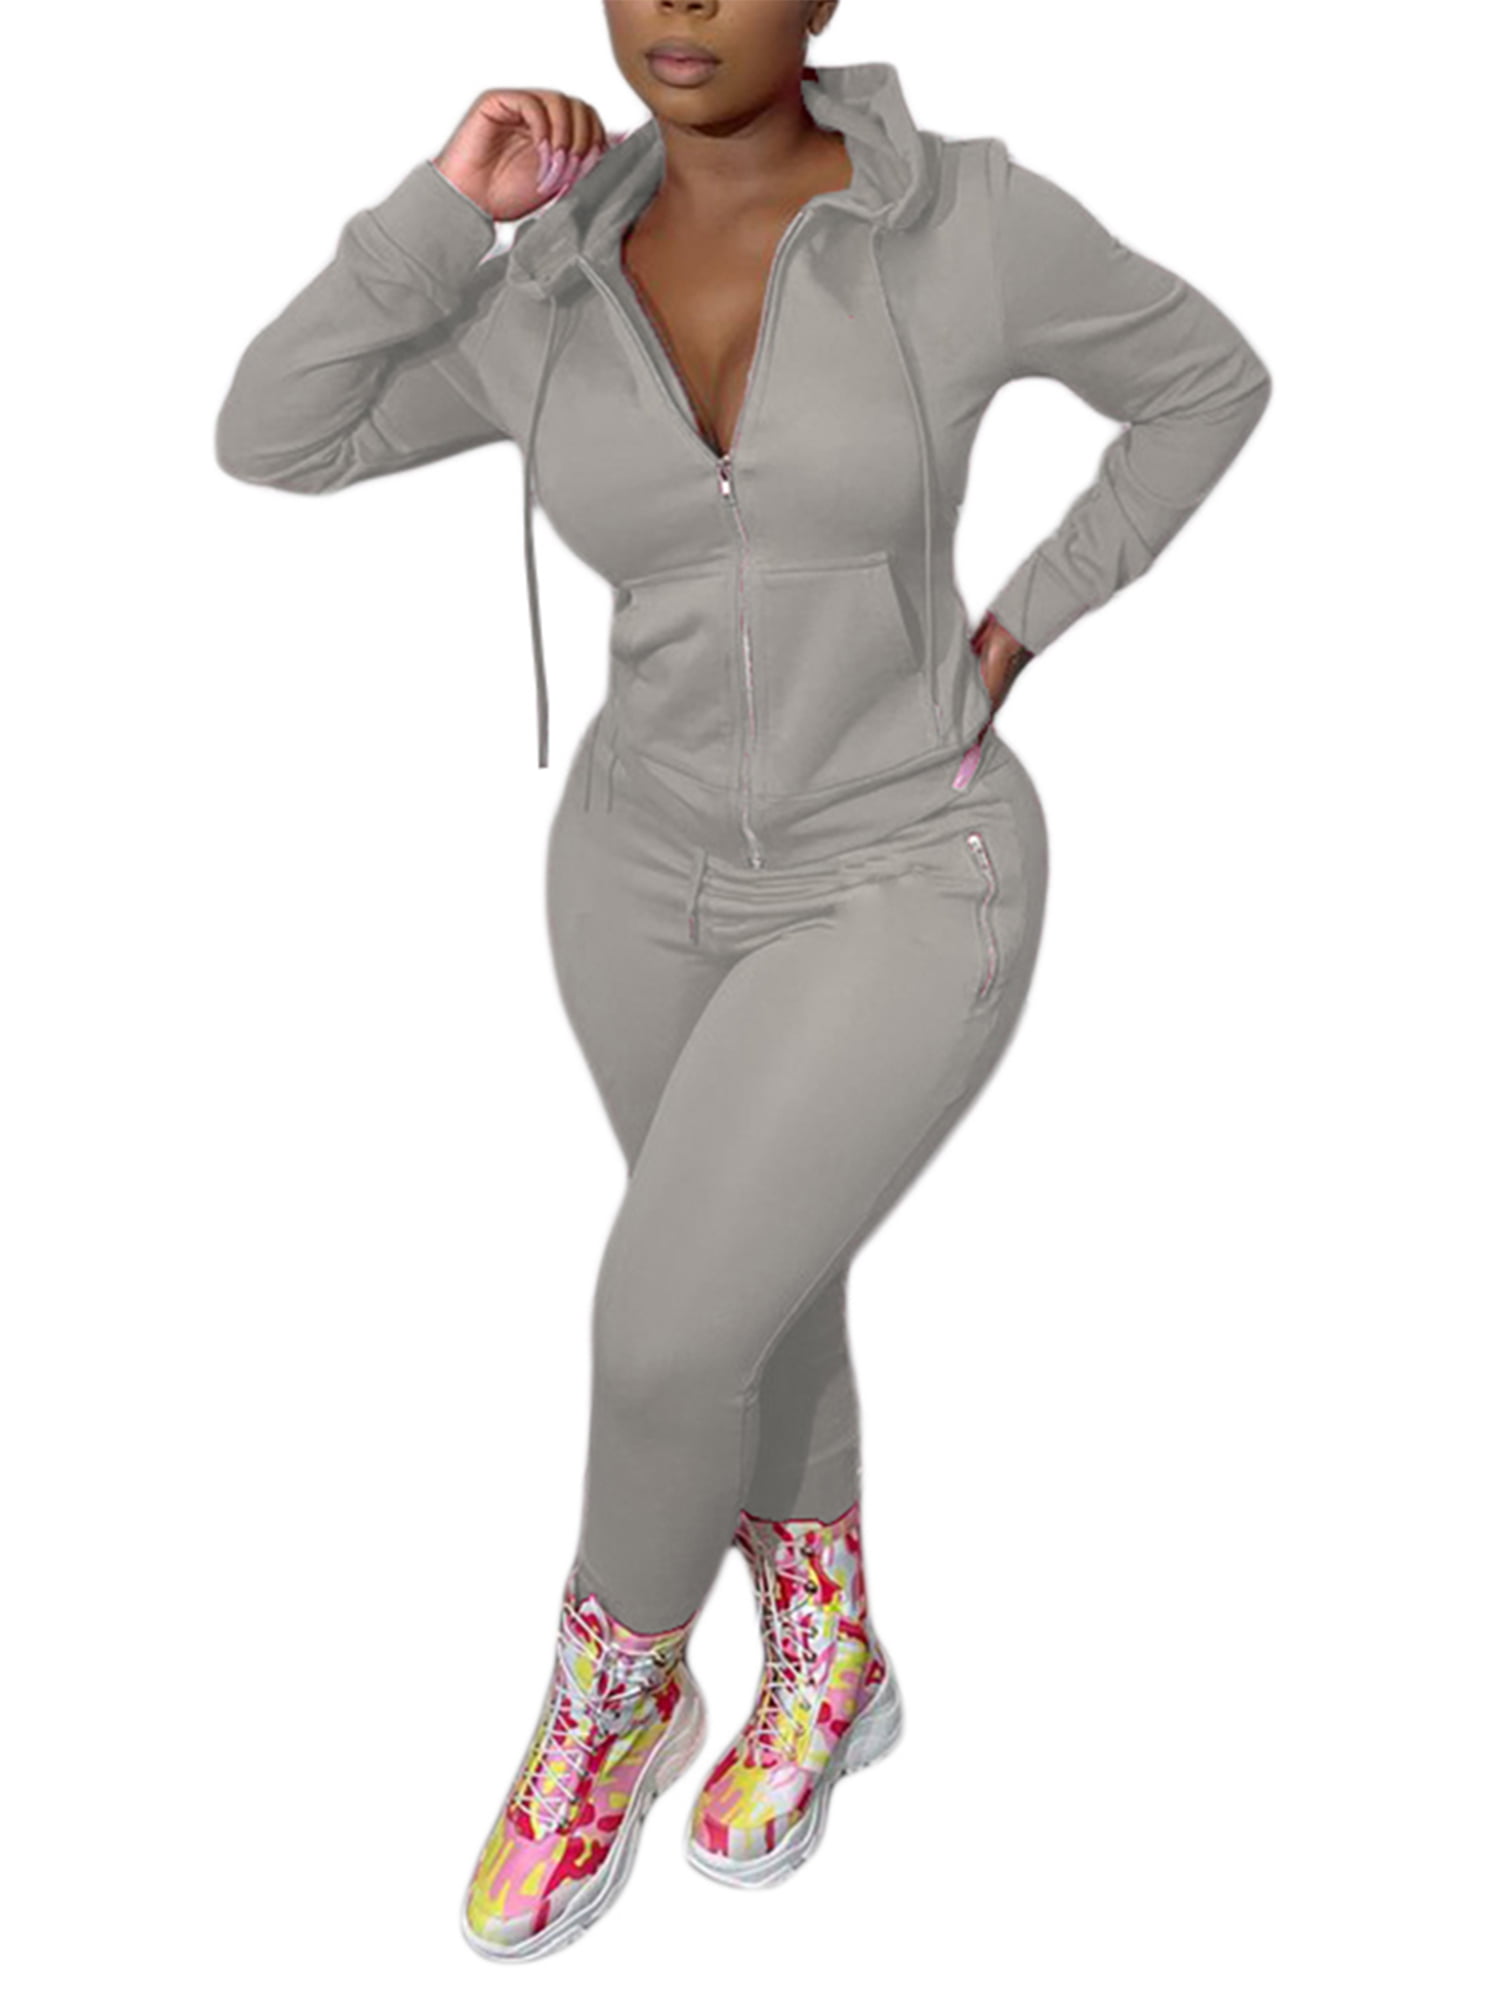 Tidecc Womens Tracksuits Zip Up Hoodies Sweatshirt Pants Sport Suit Hooded Tracksuit Jogging Outfit